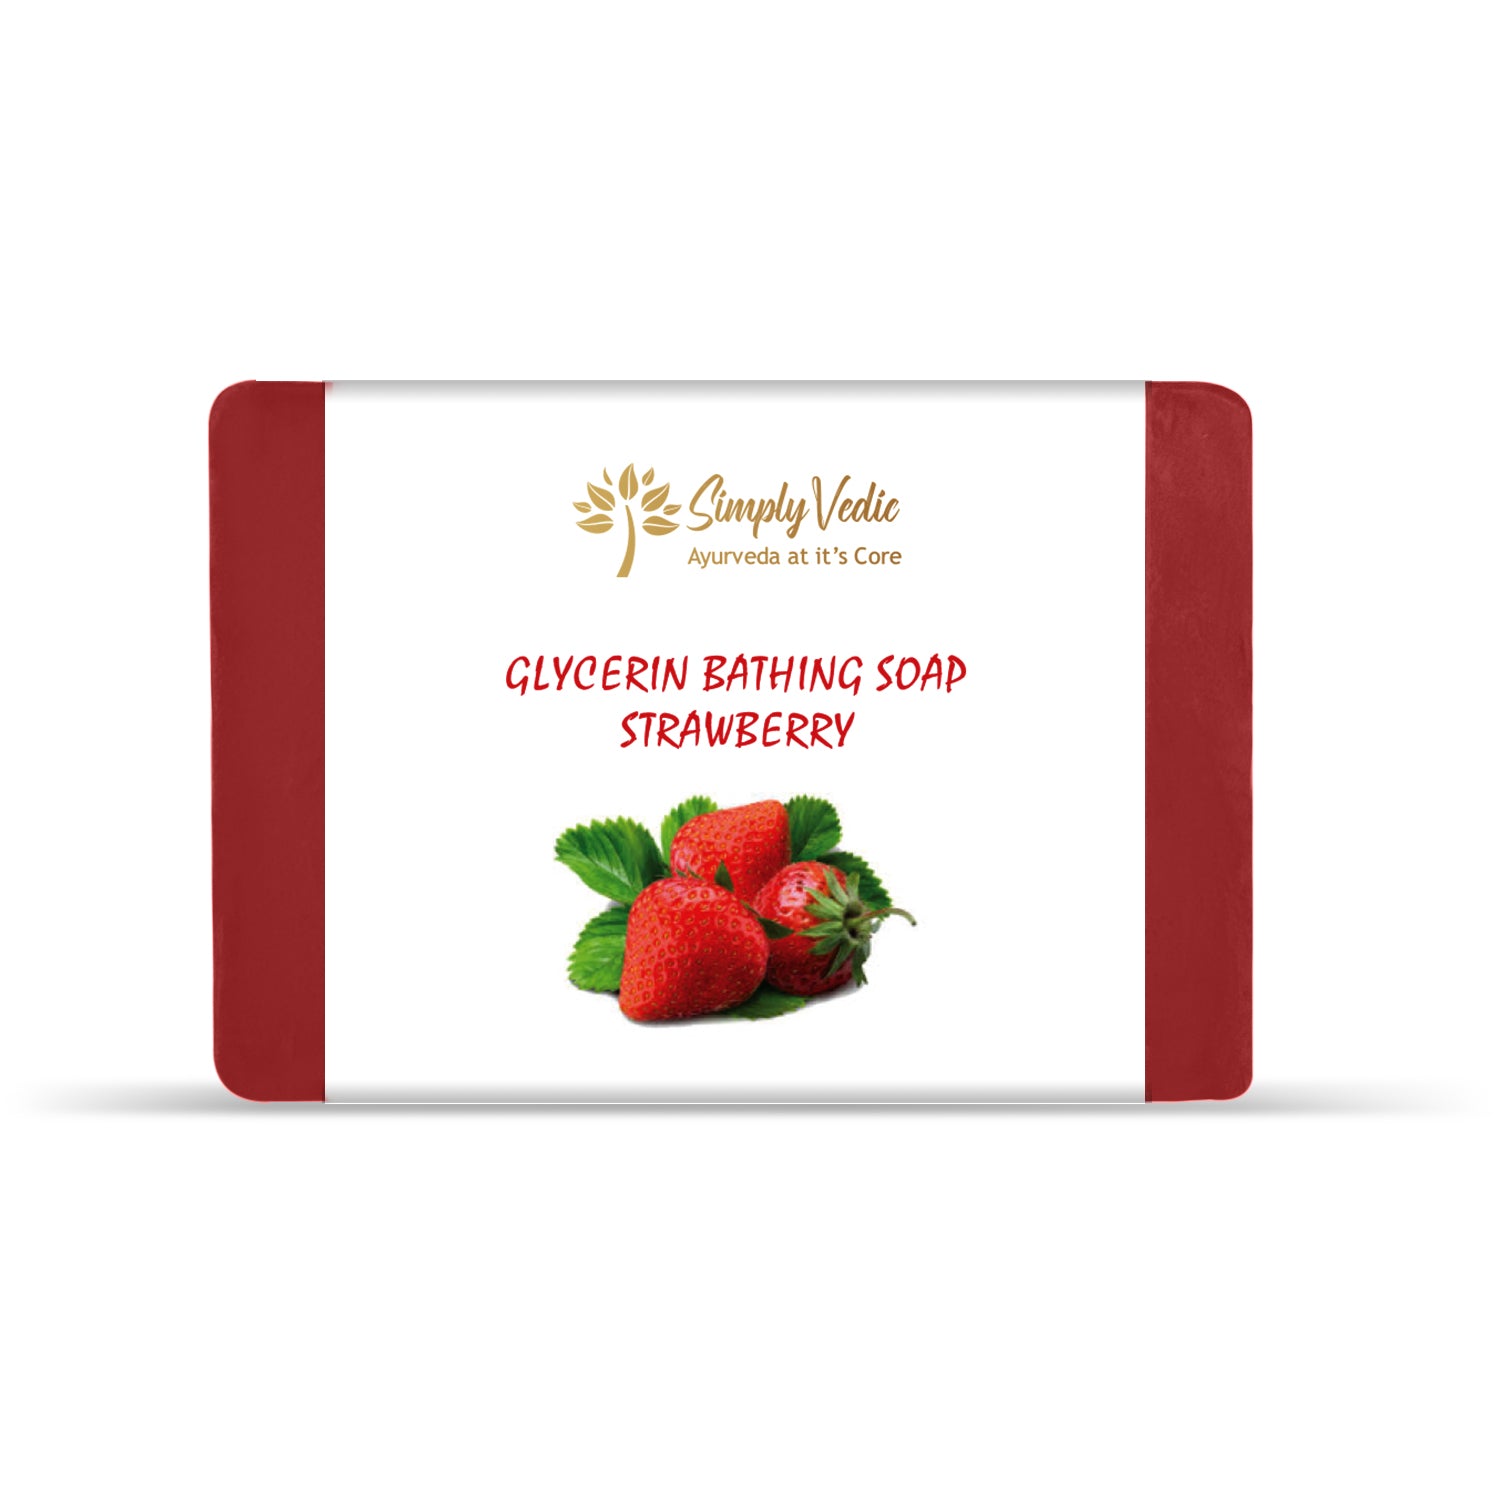 Simply Vedic's Strawberry Glycerin soap